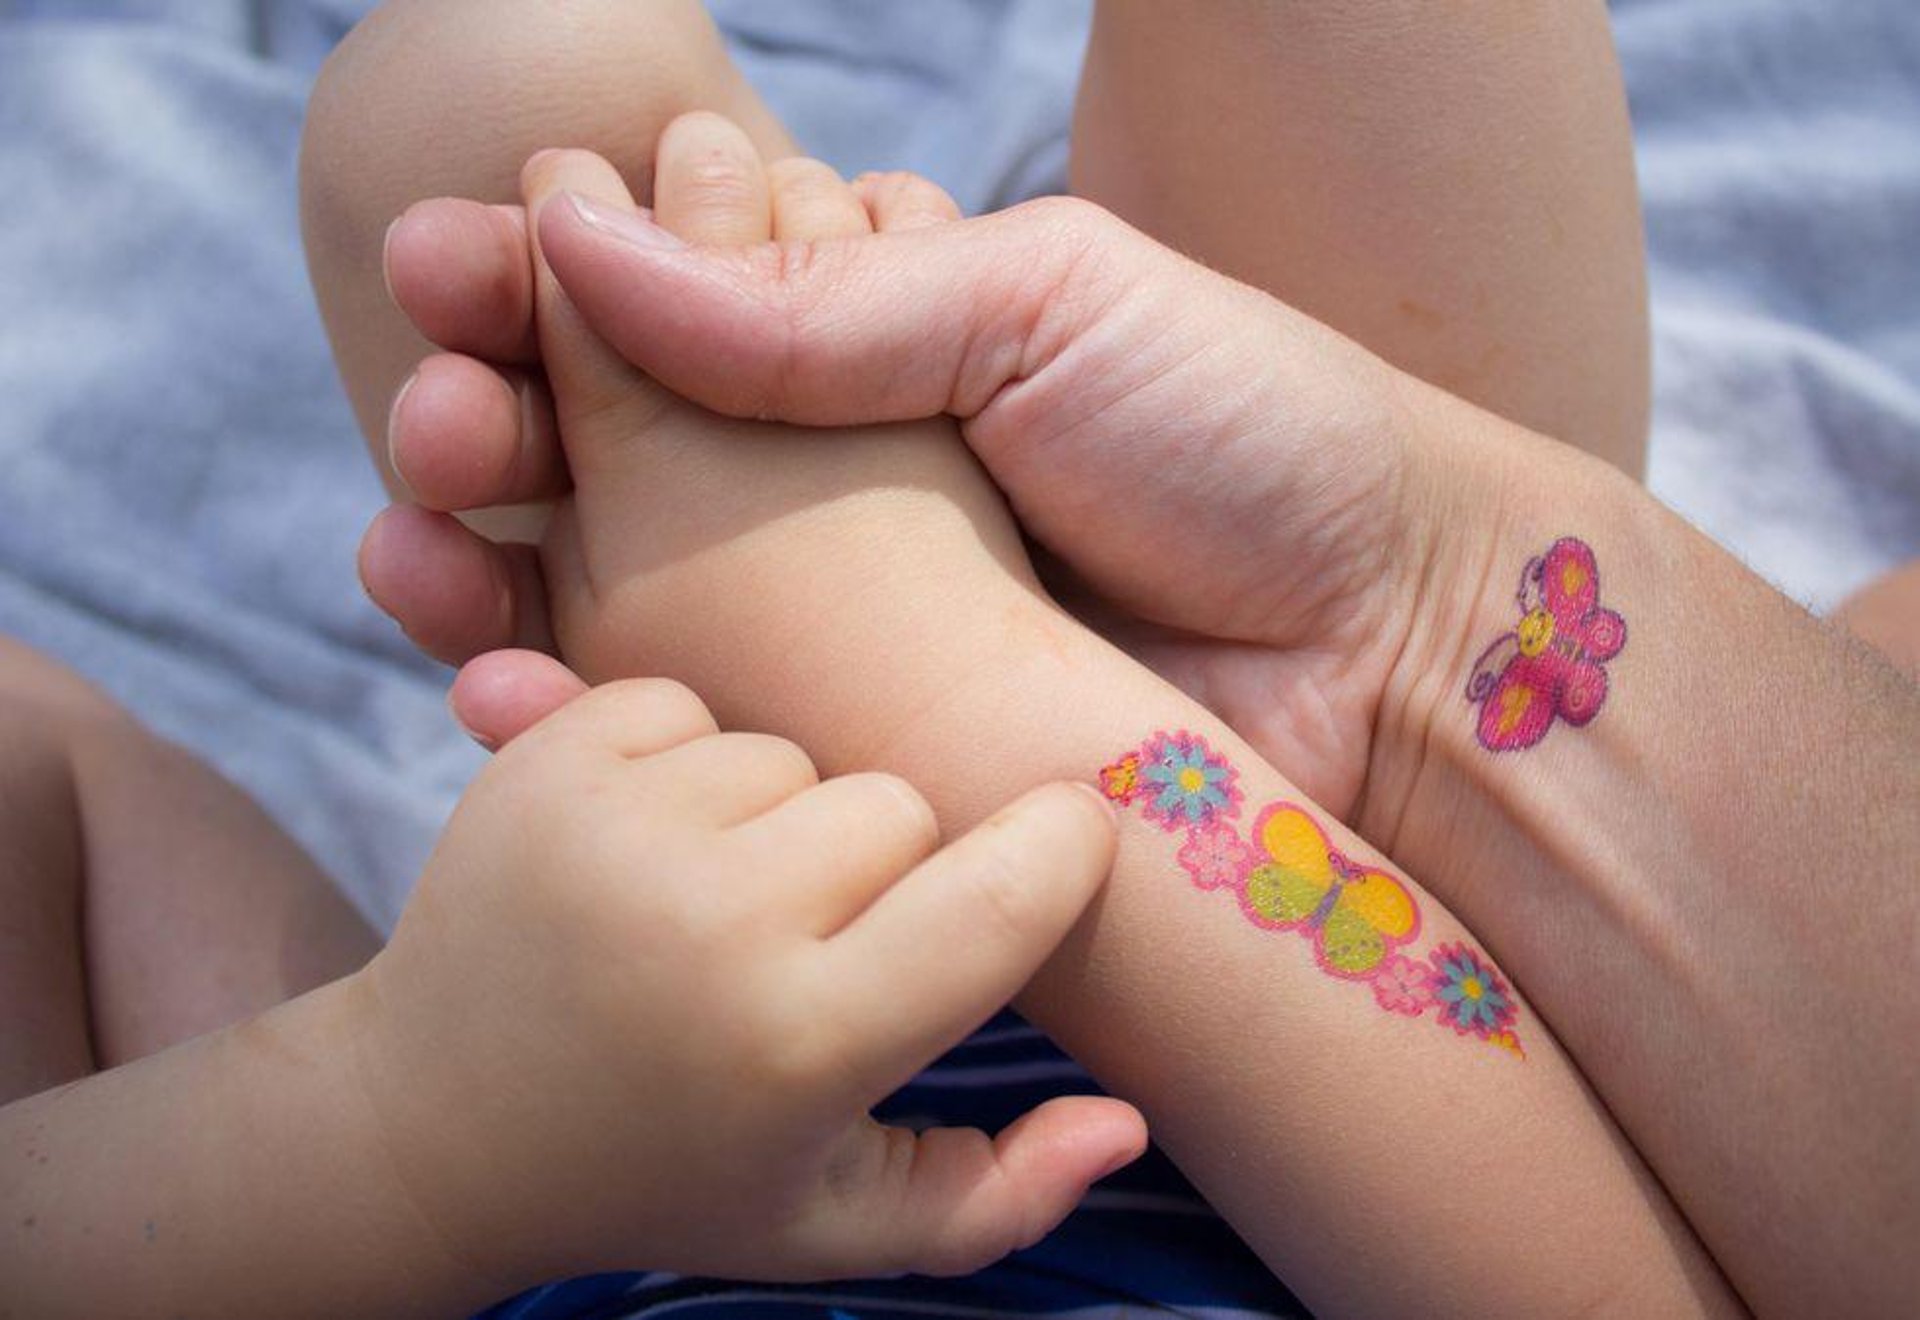 Kids' Temporary Tattoos Can Harm Skin Function - Consumer Health News